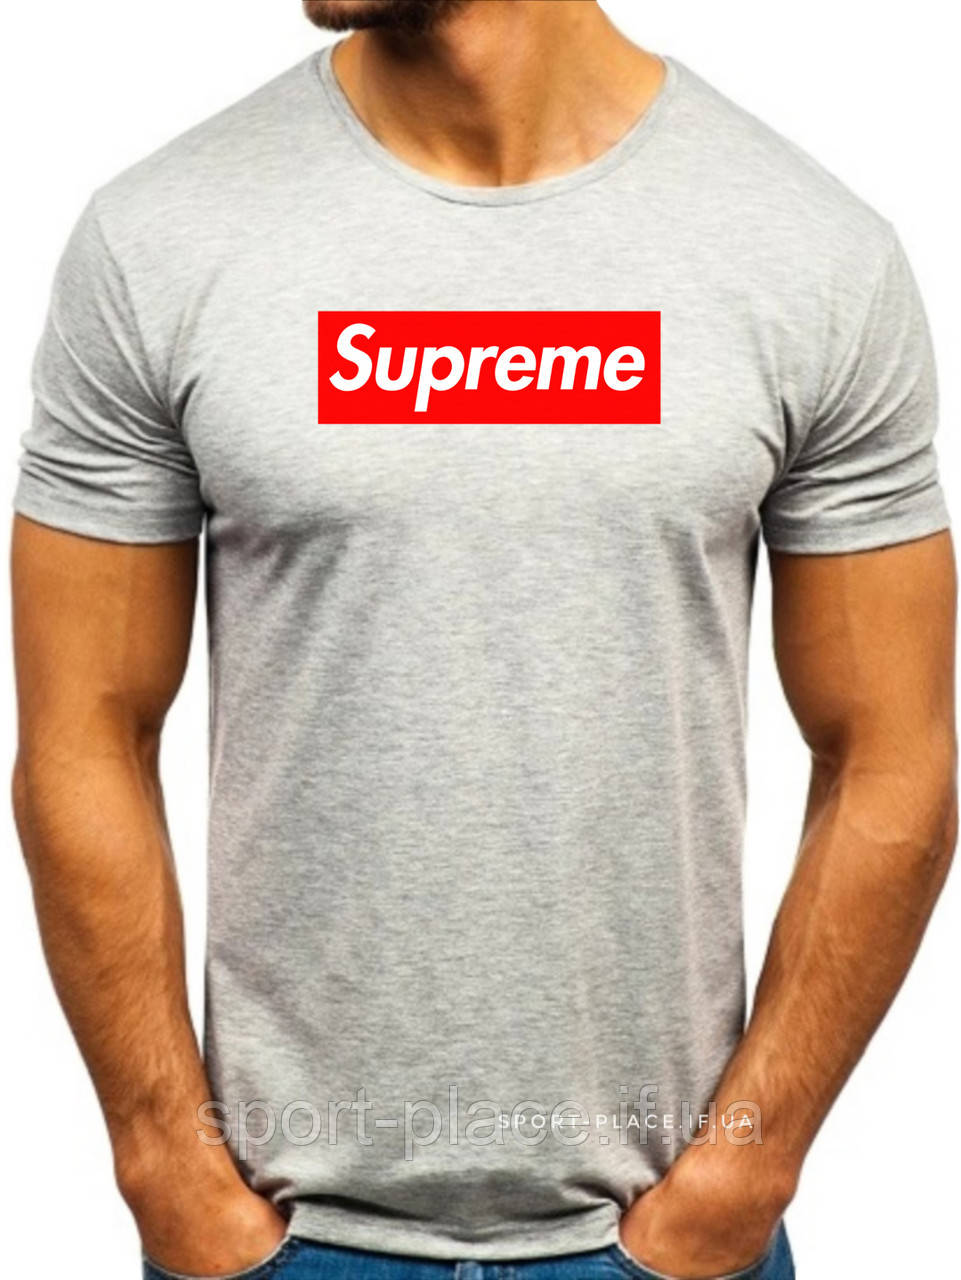 Чоловіча футболка Supreme (Ідеальна) сіра (велика емблема) бавовна